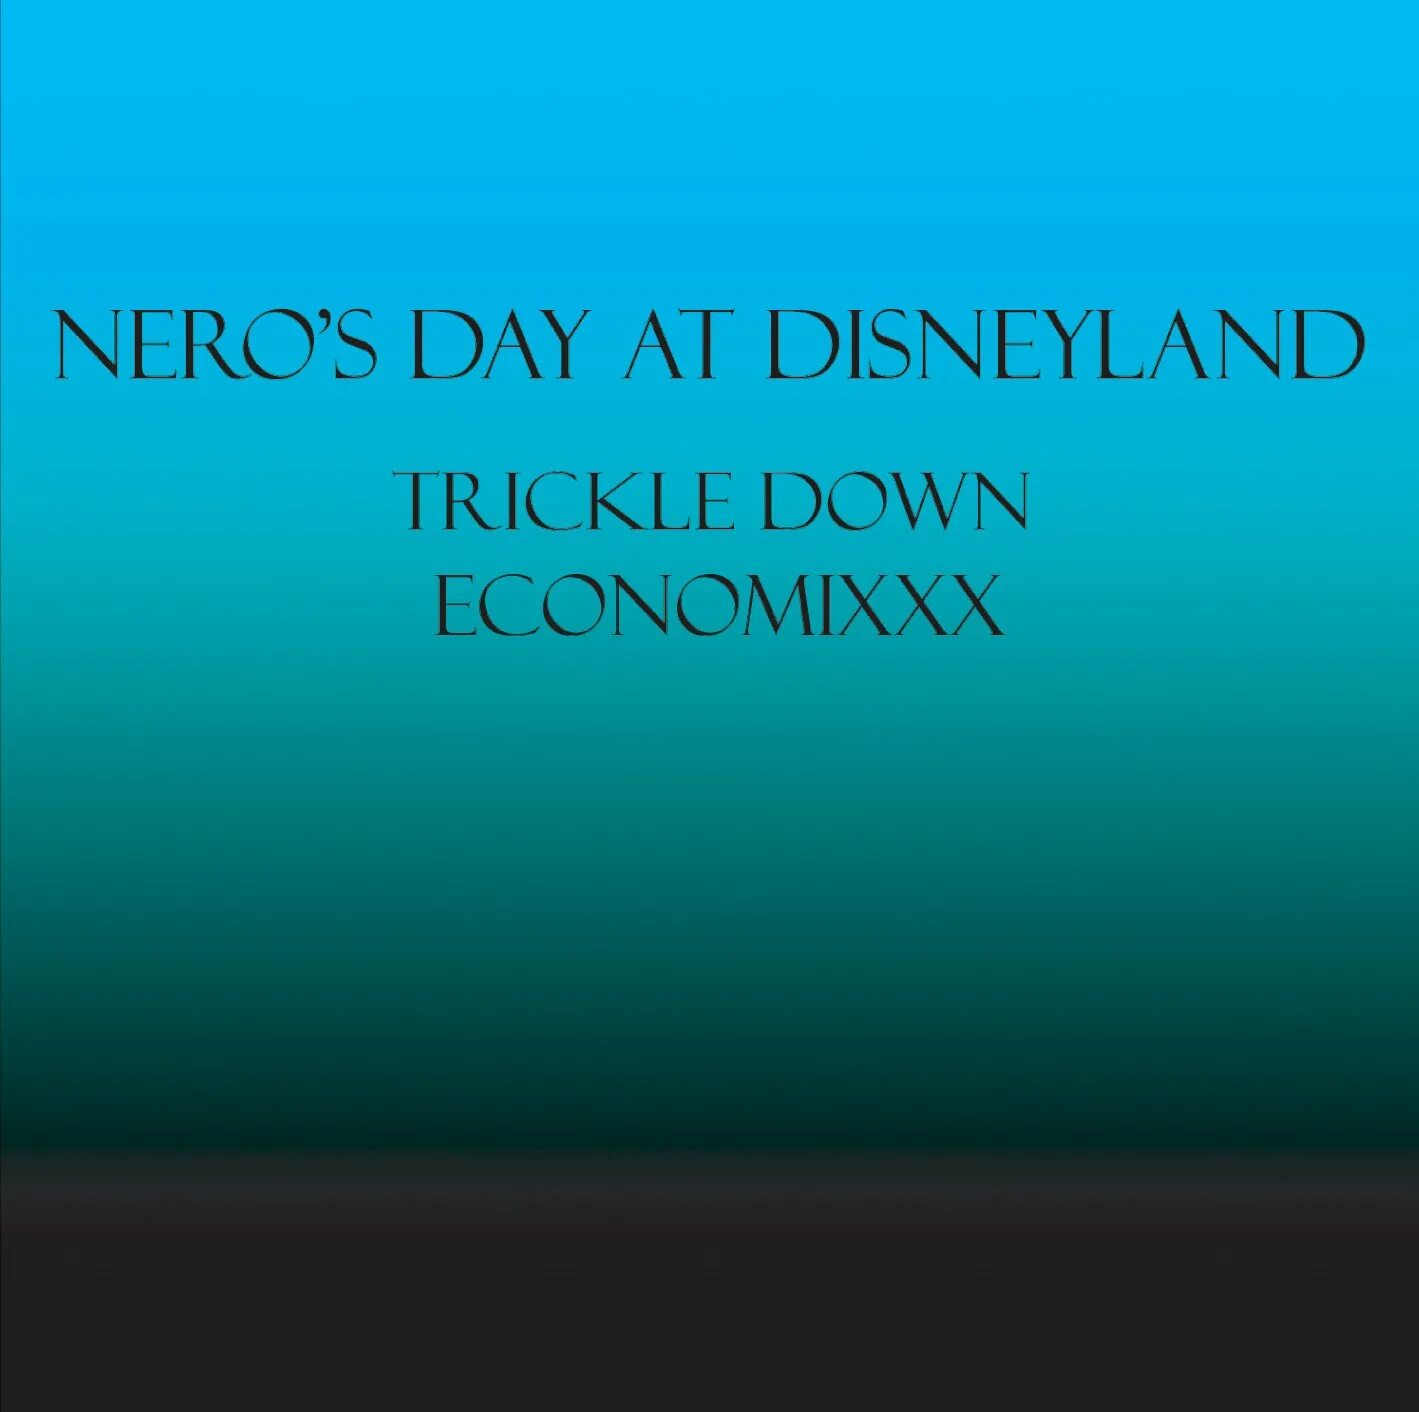 Winter journey nero s day. Neros Day at Disneyland. Nero's Day at Disneyland. Nero s Day at Disneyland альбом. Nero s Day at Disneyland песни.